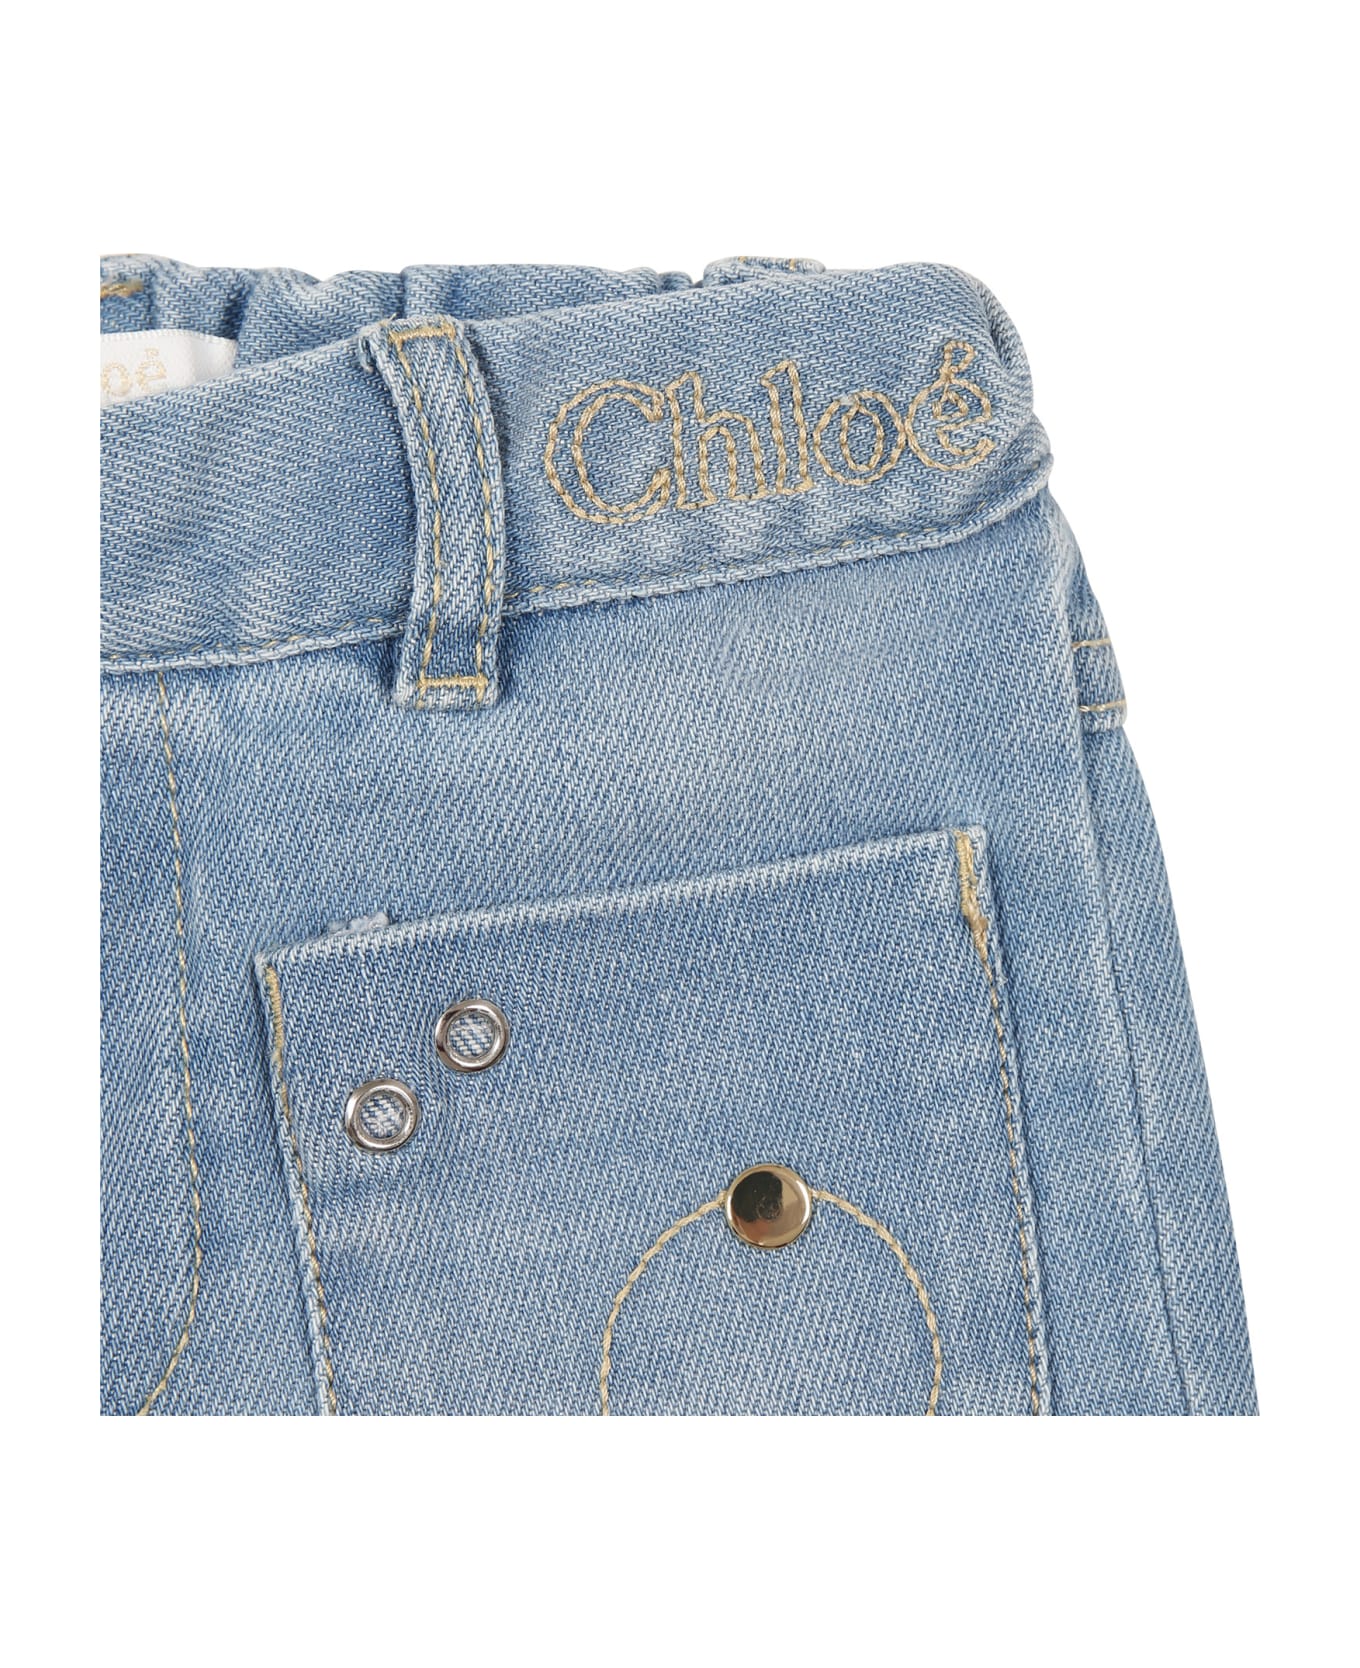 Chloé Denim Jeans For Baby Girl - Denim ボトムス